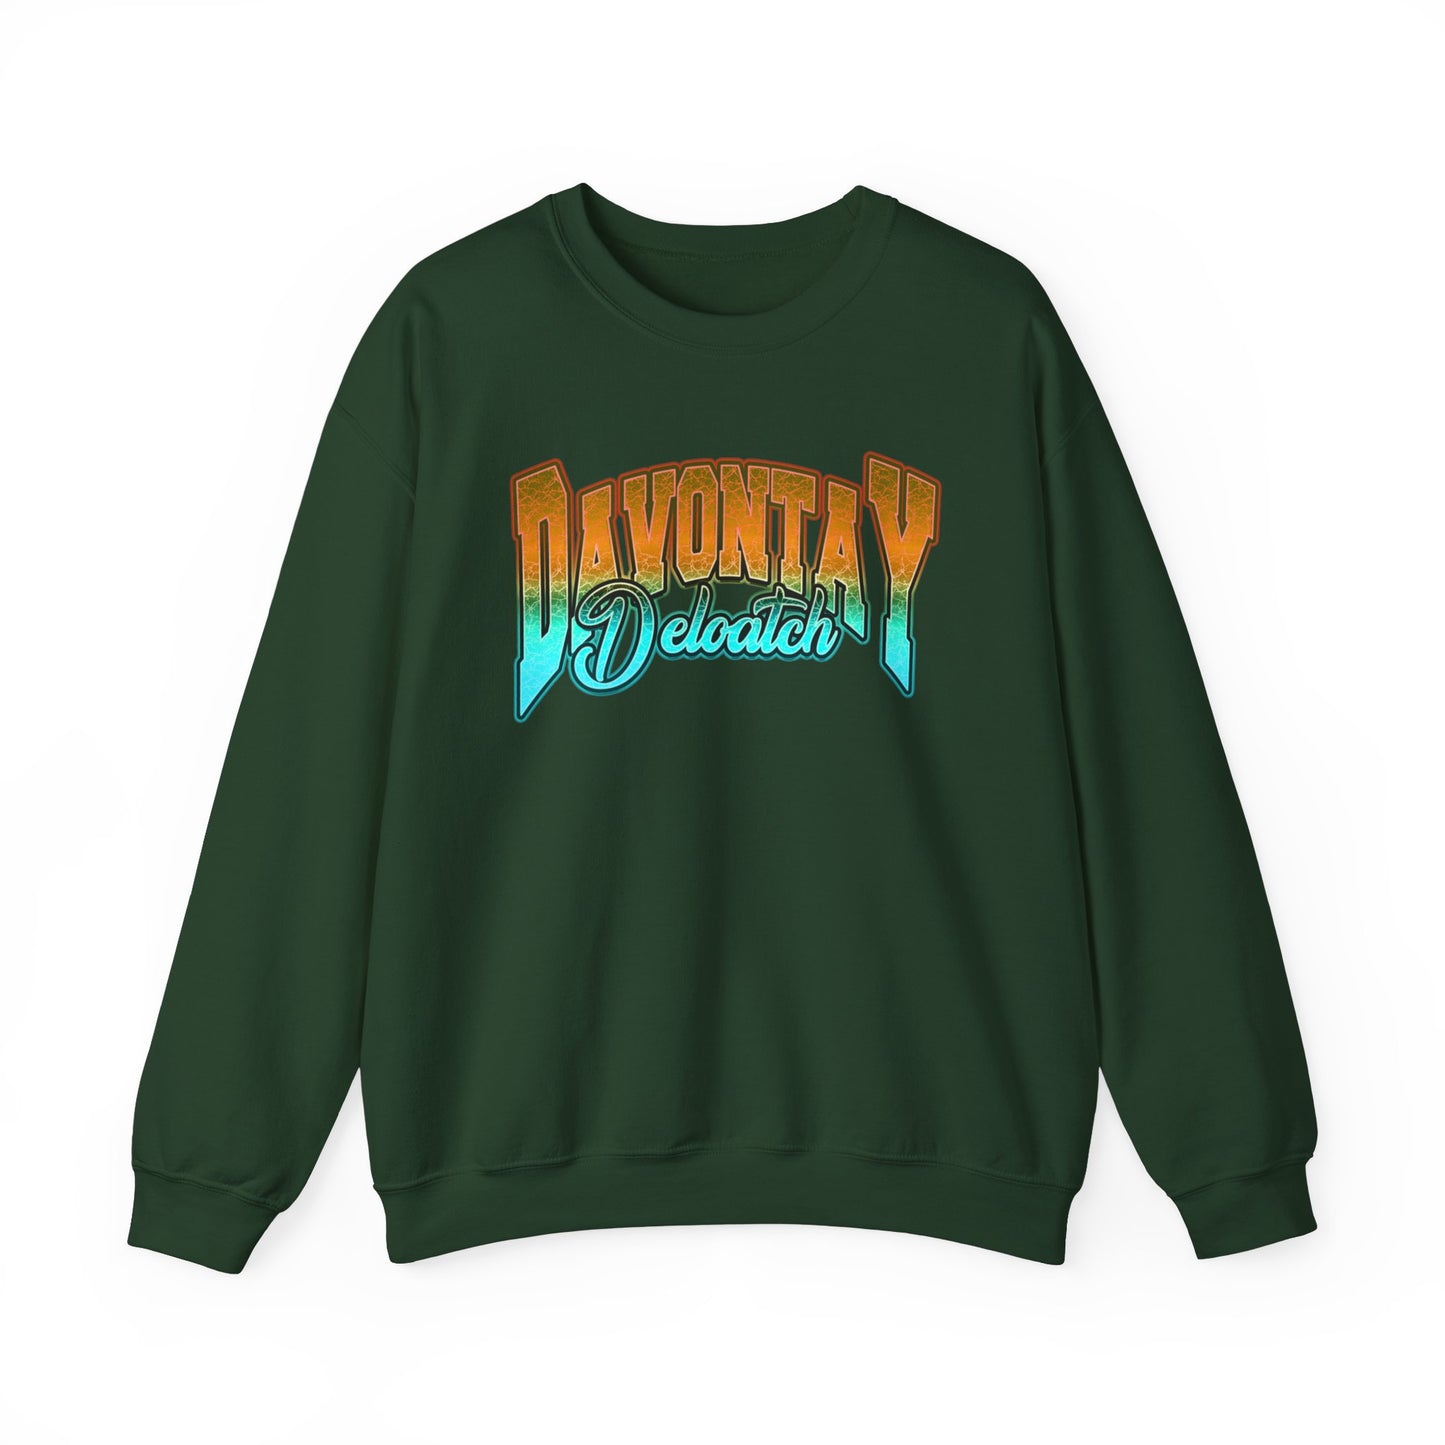 Devontay Deloatch Crewneck Sweatshirt